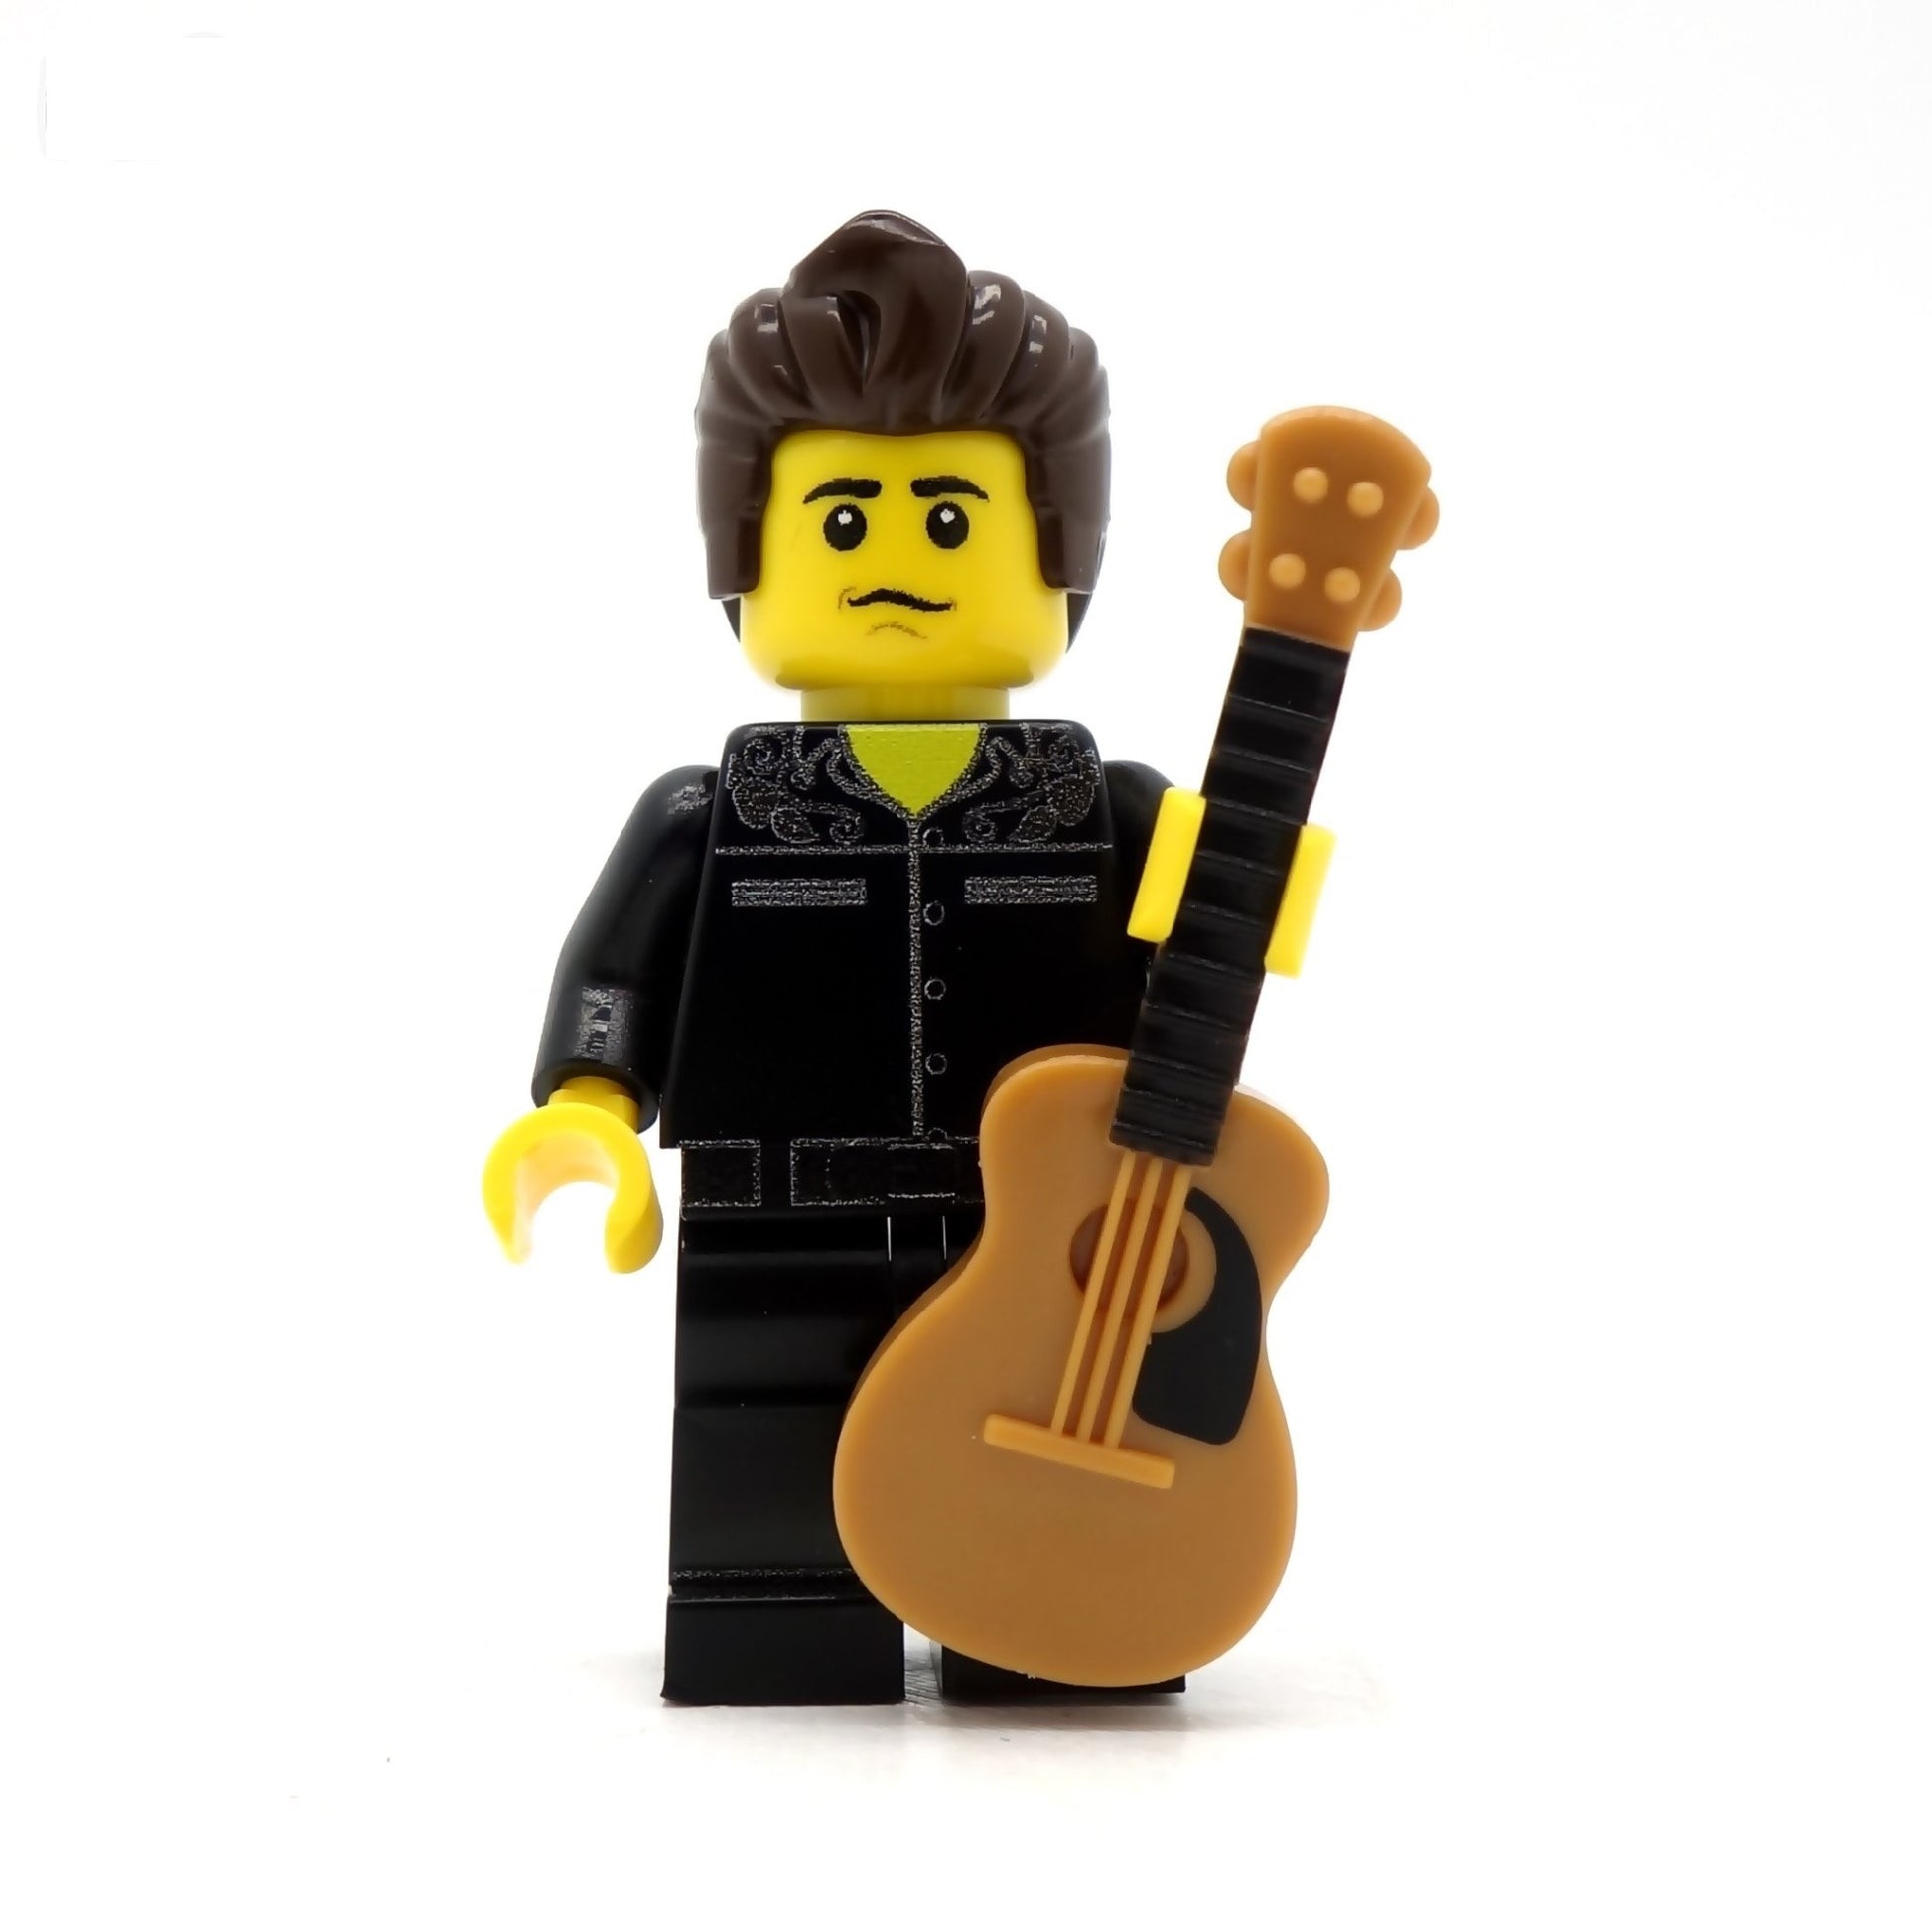 Johnny Cash (the Man in Black) Custom LEGO Minifigure